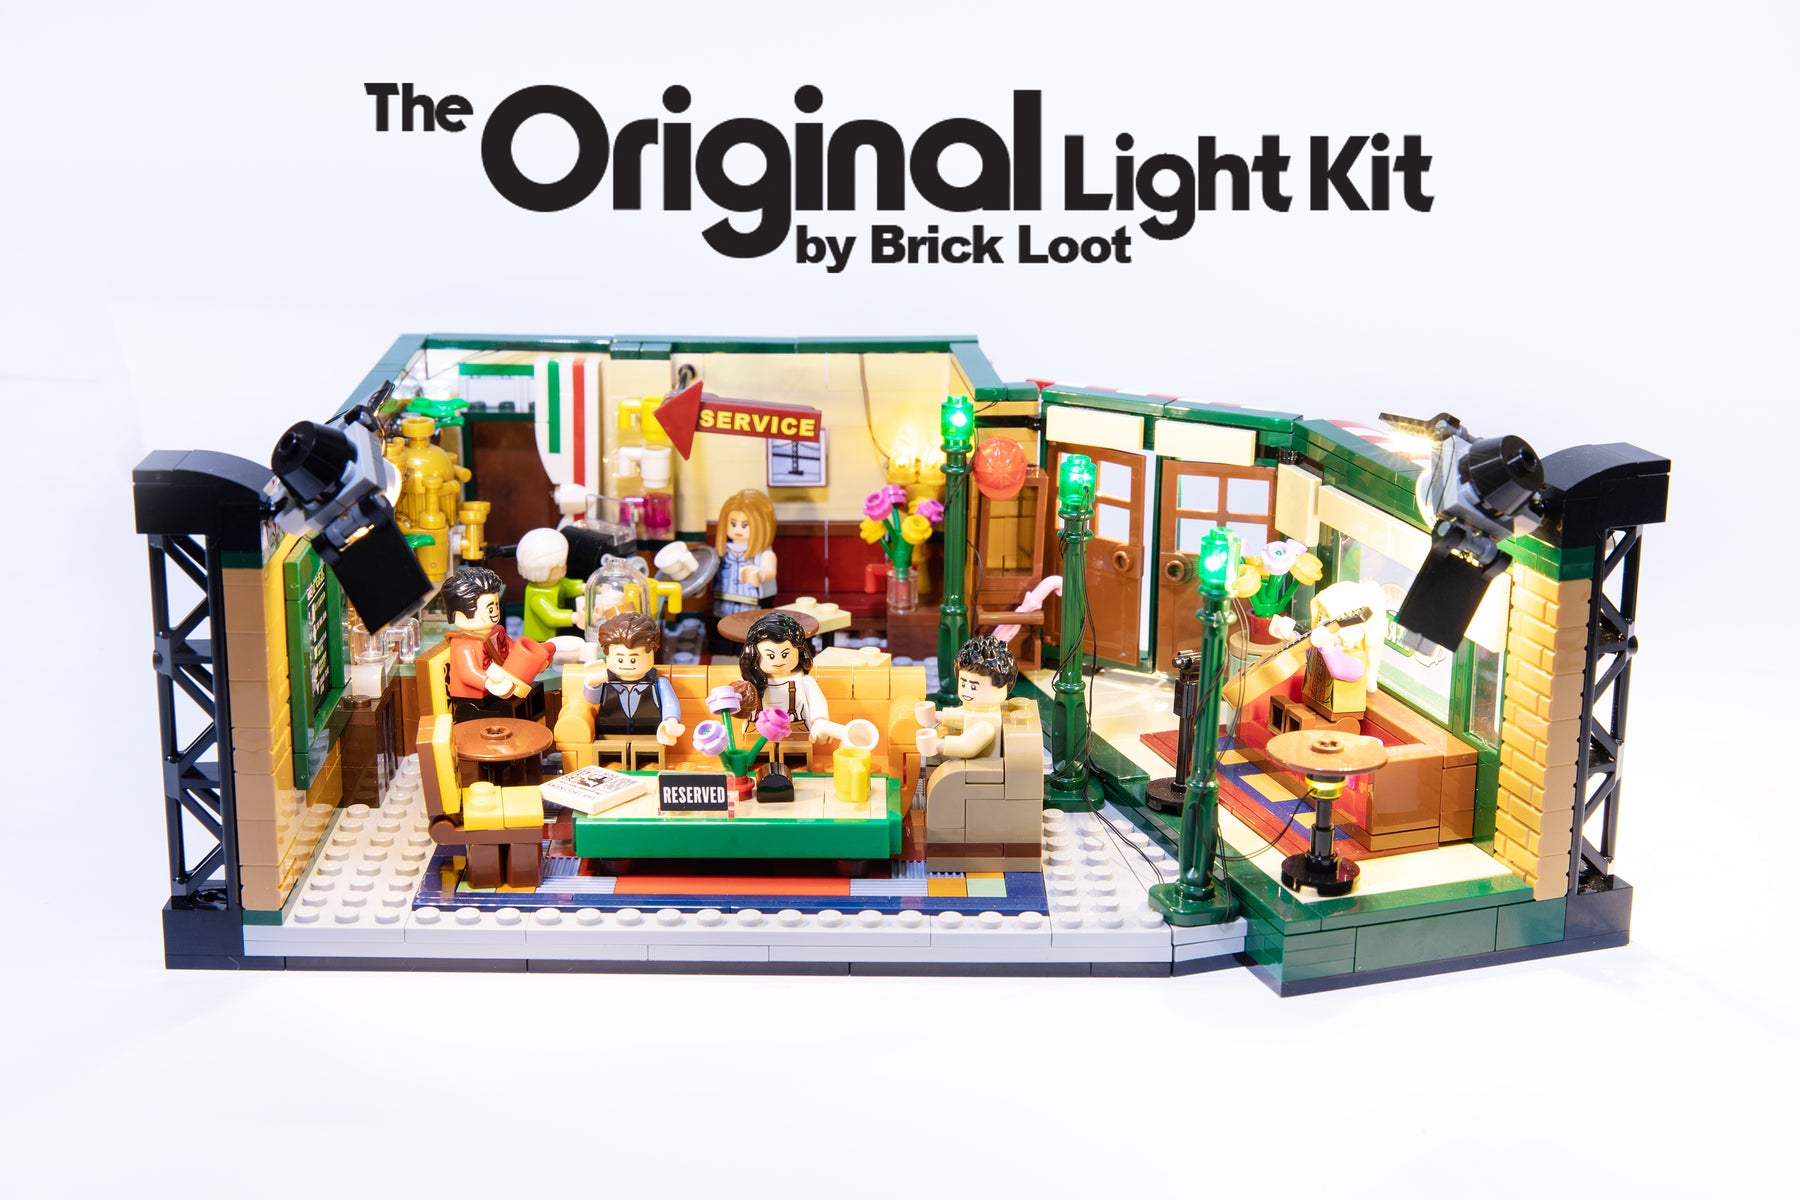 LEGO Ideas Central Perk - Friends